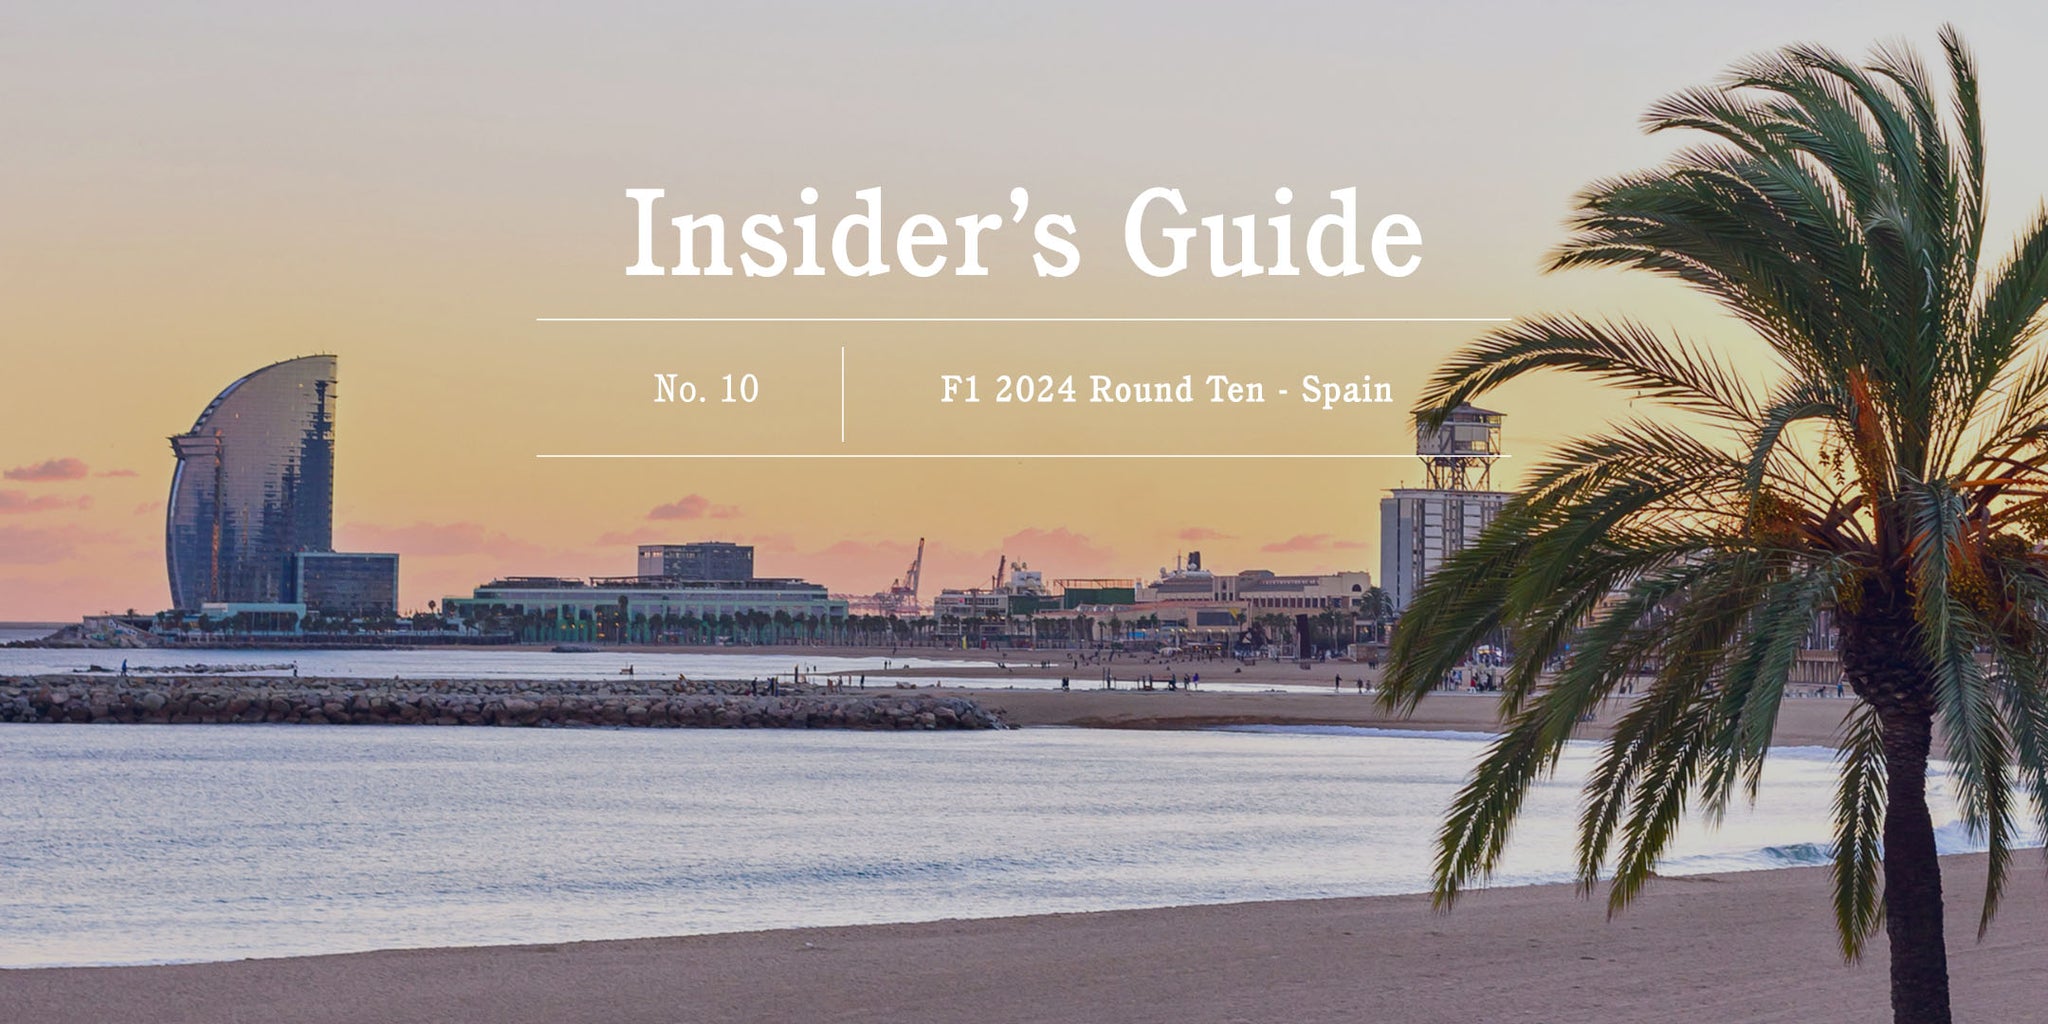 F1-2024-Insider-s-Guide-No.-10-Spain - GLOBE-TROTTER